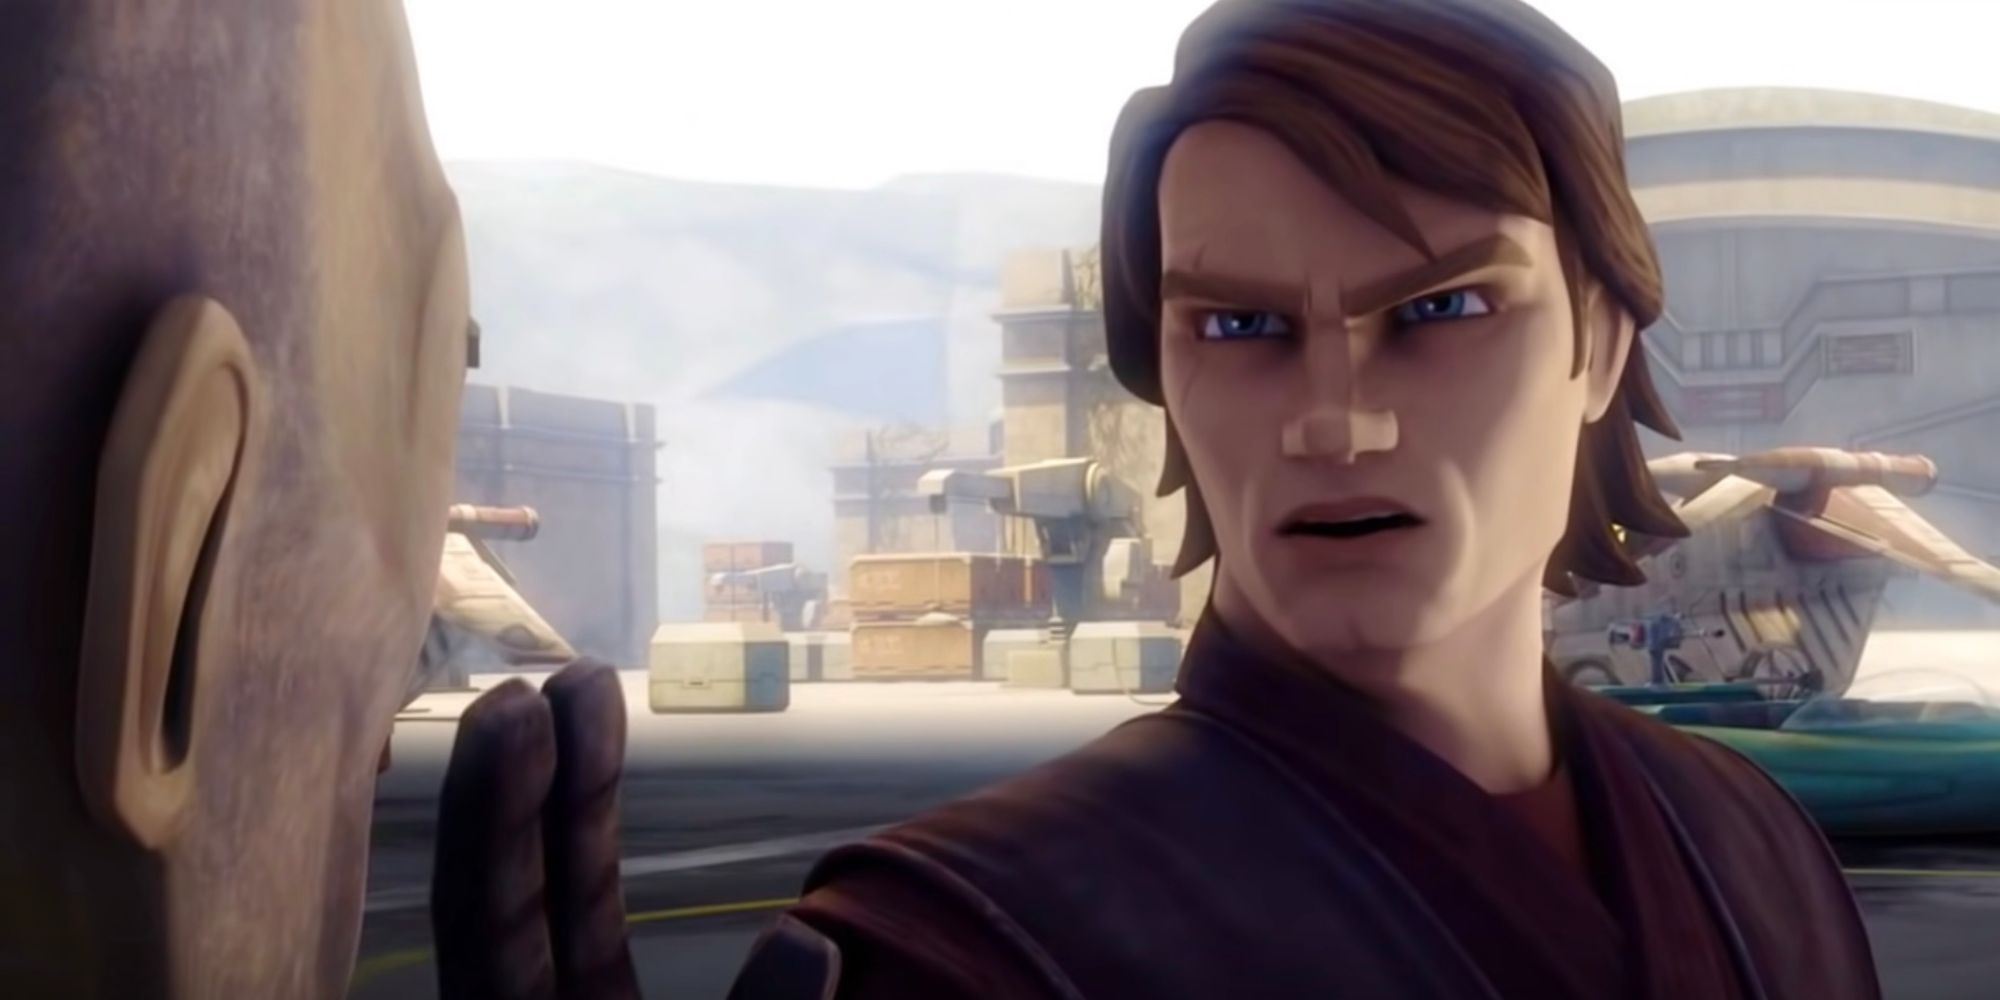 Anakin learning Obi-Wan lied in Clone Wars TV series